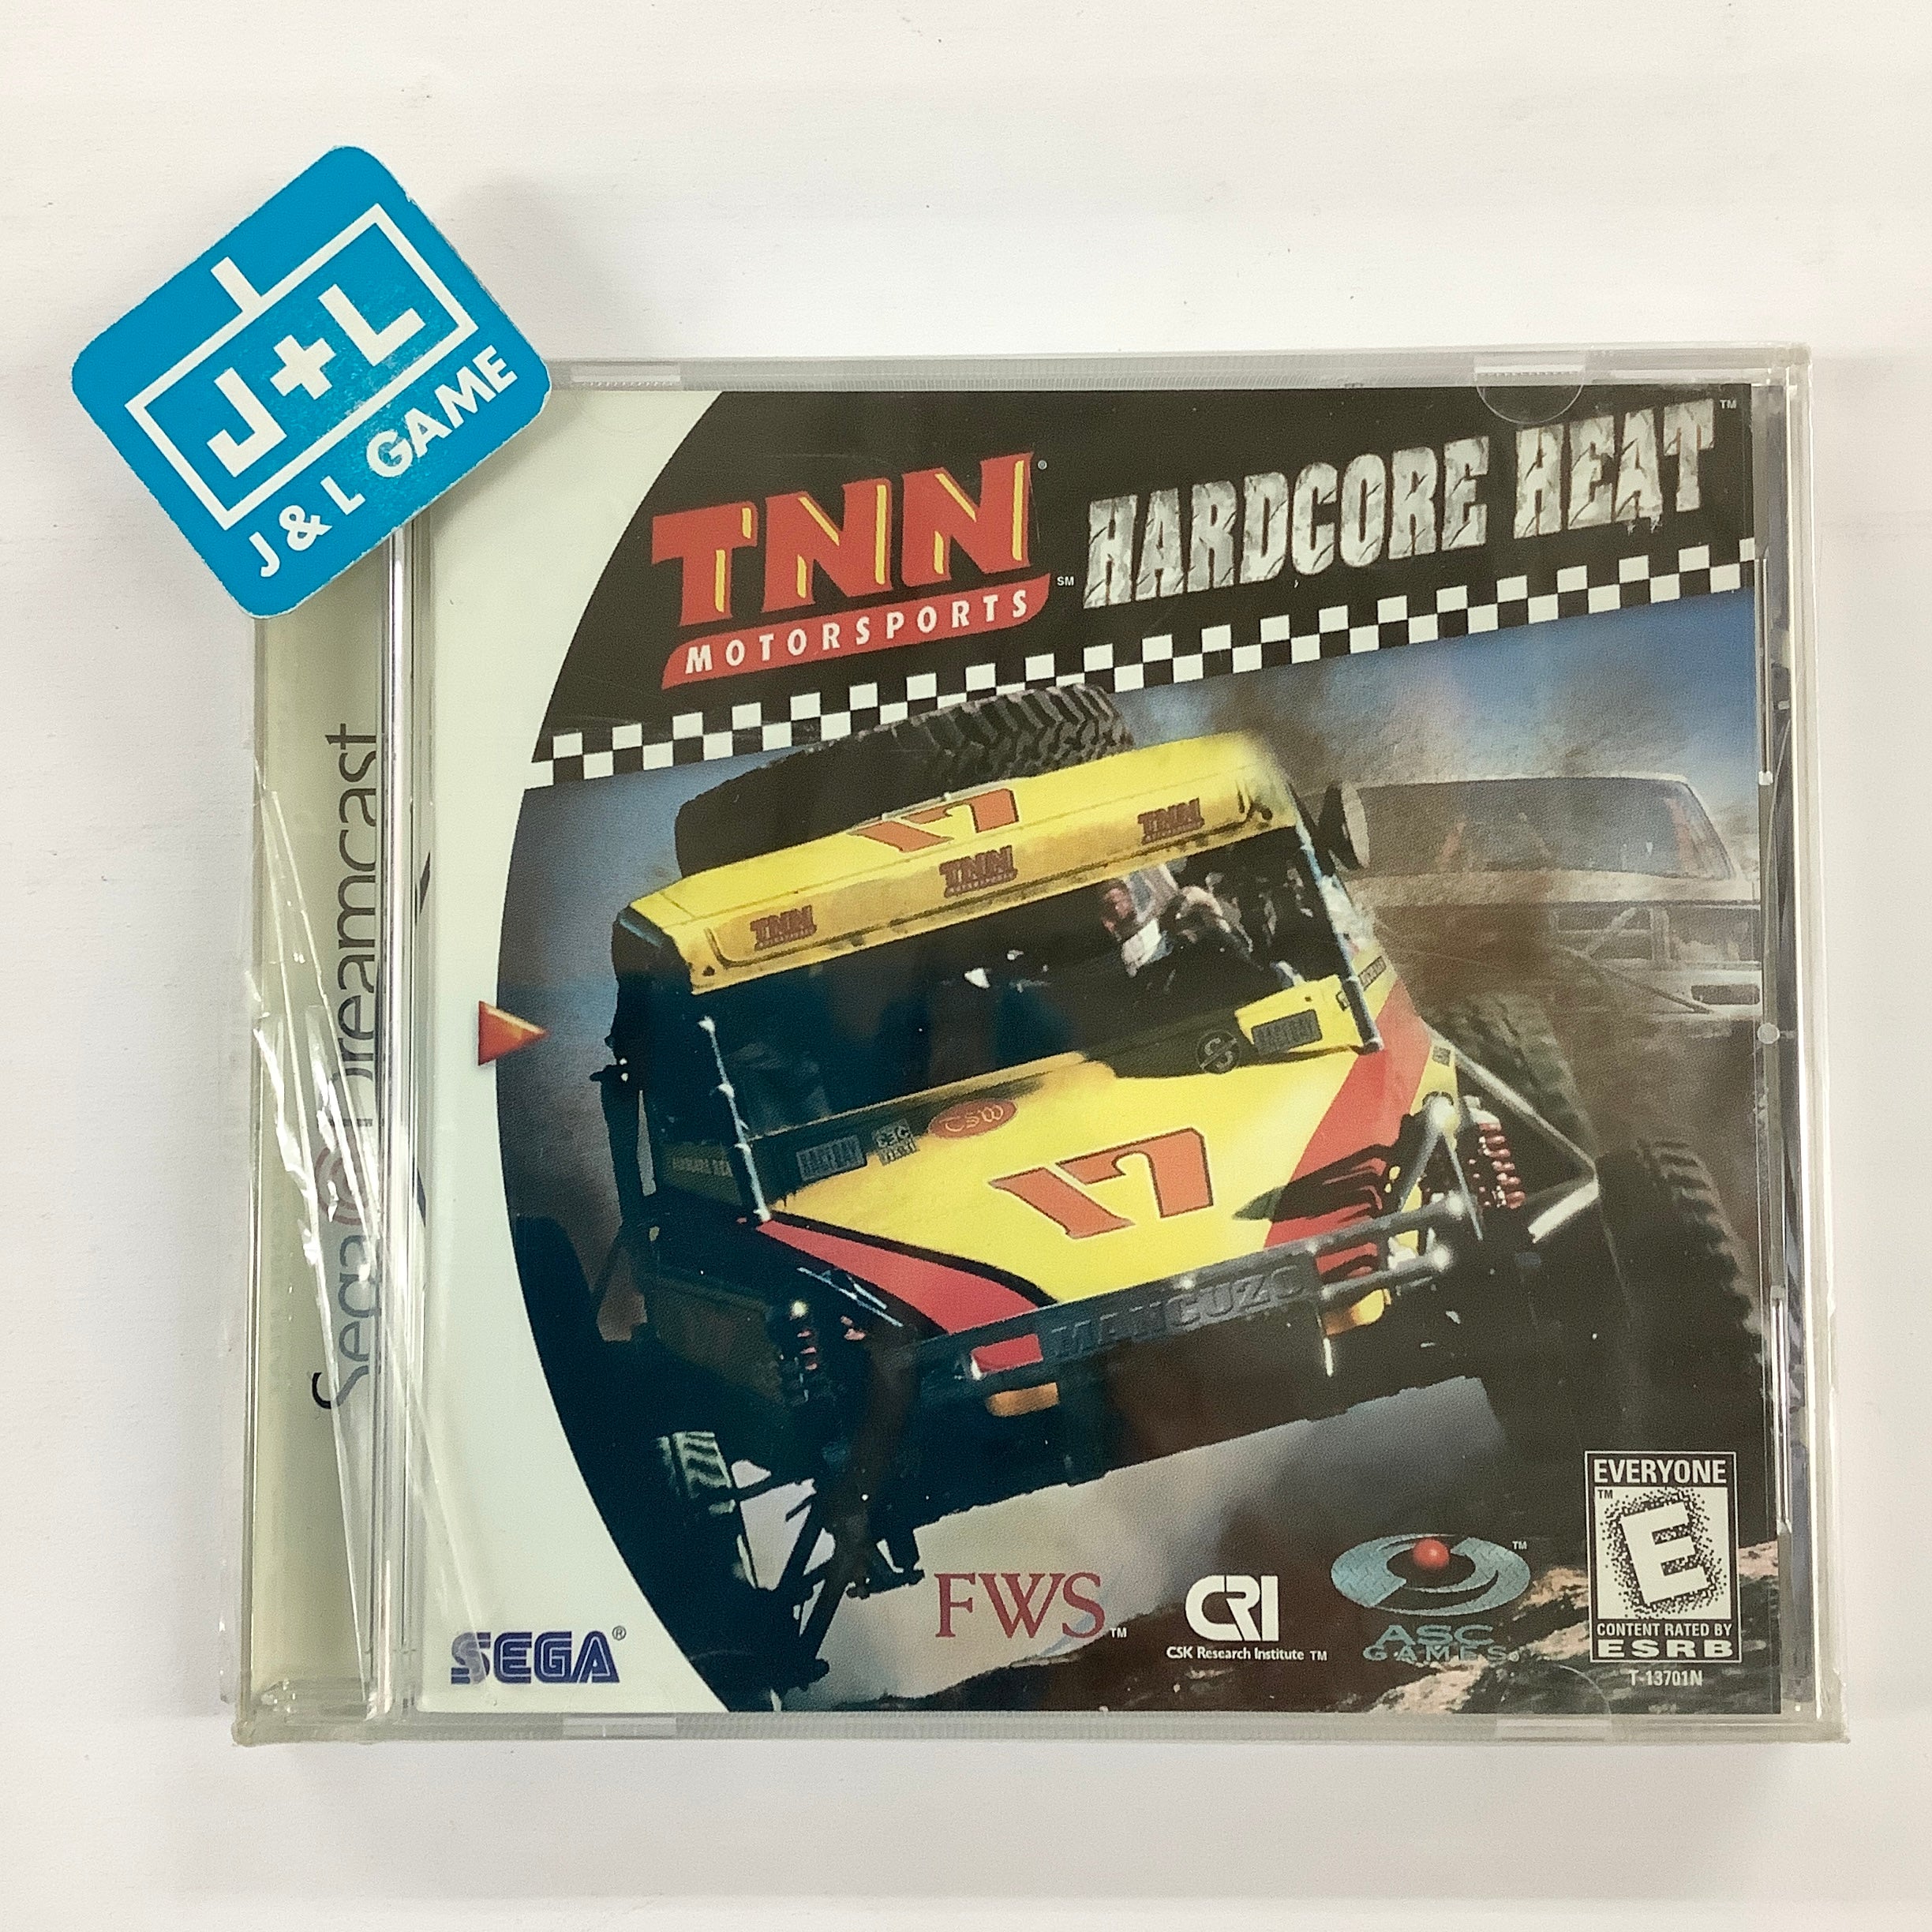 TNN Motorsports HardCore Heat - (DC) SEGA Dreamcast Video Games ASC Games   